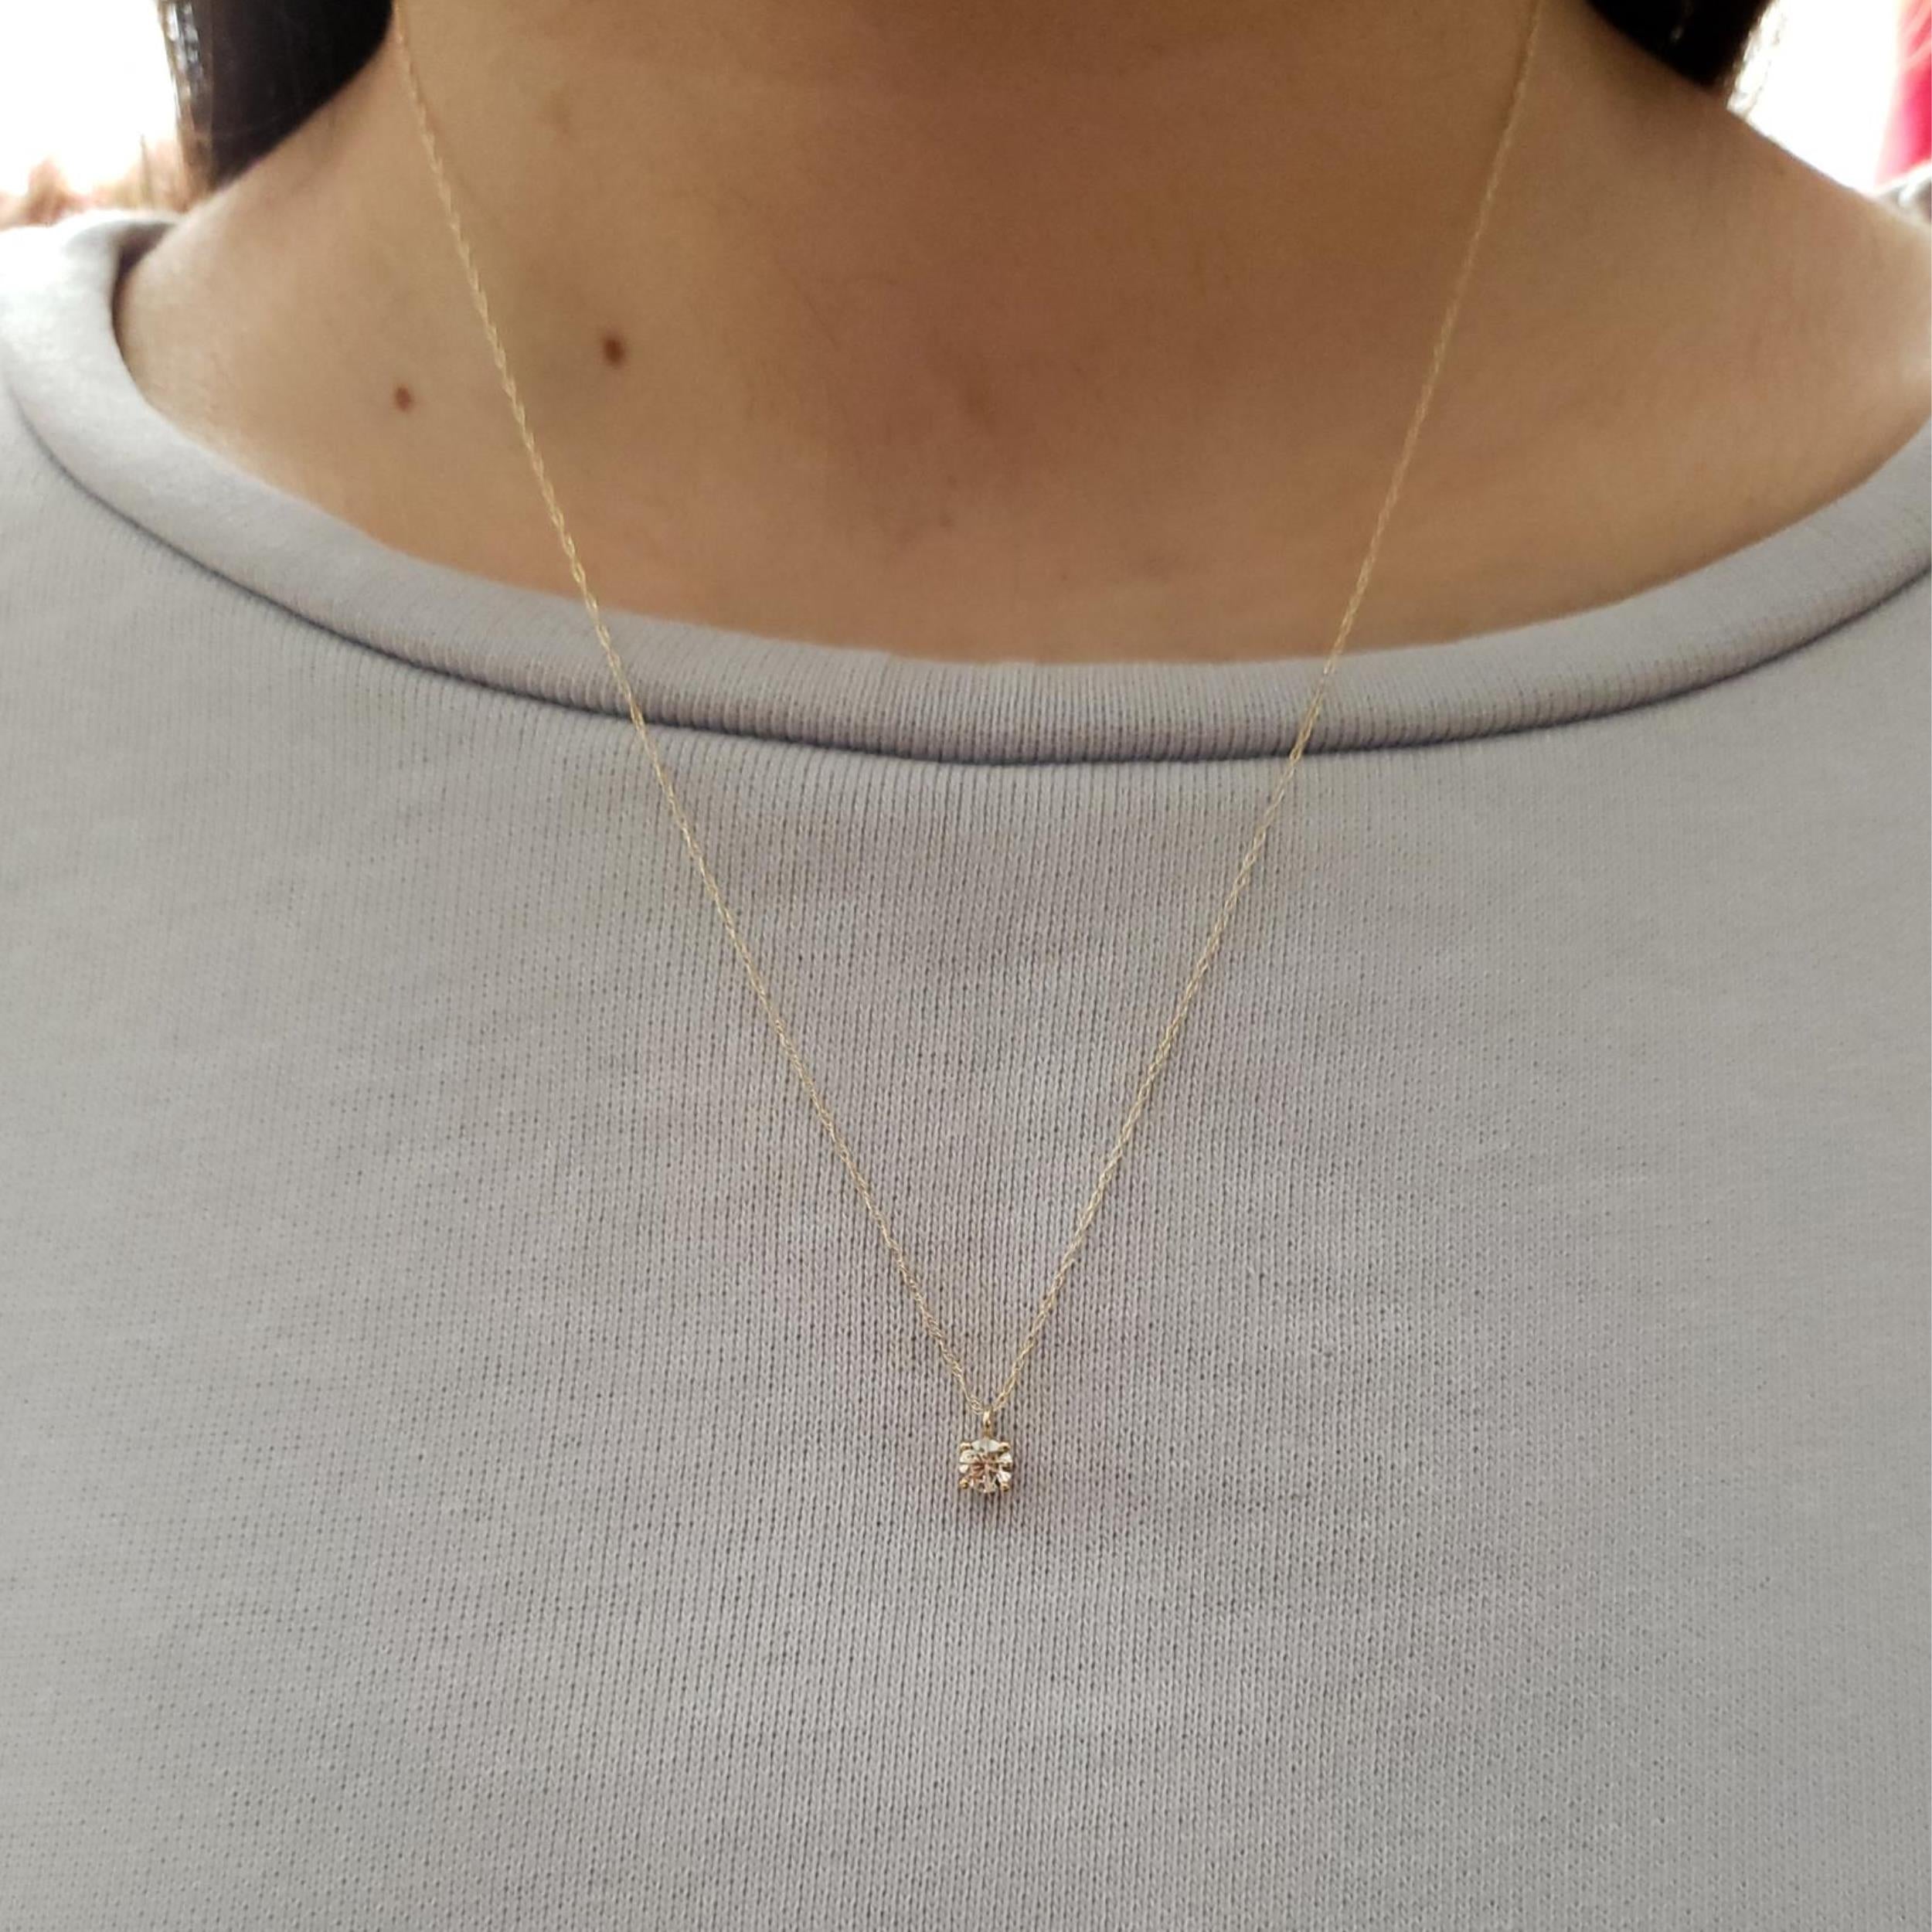 14Kt Gold 0.25 Ct Genuine Natural Diamond Pendant Necklace